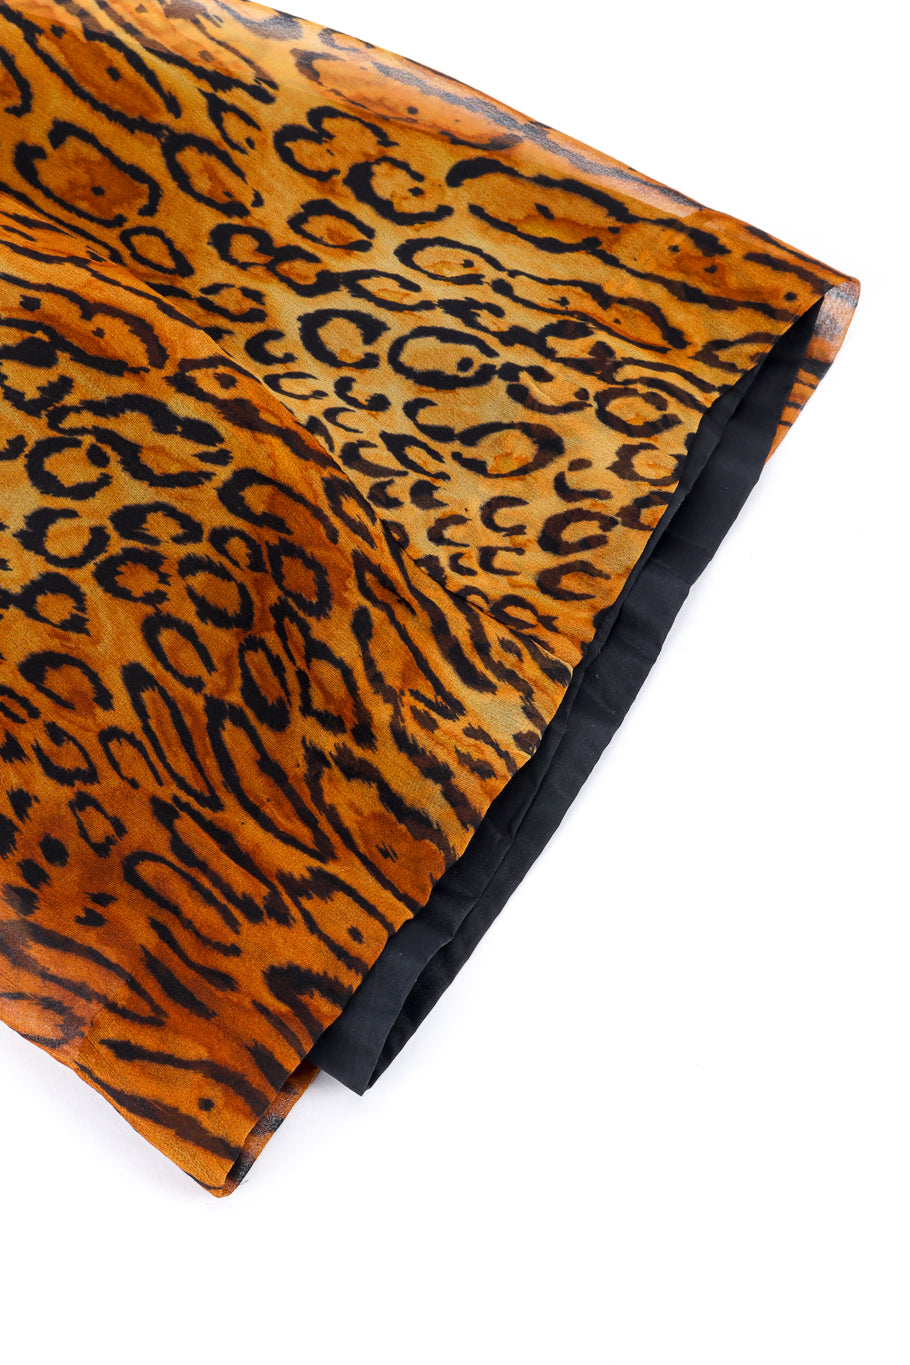 Vintage Oscar de la Renta Leopard Silk Jumpsuit pant leg lining closeup @recessla